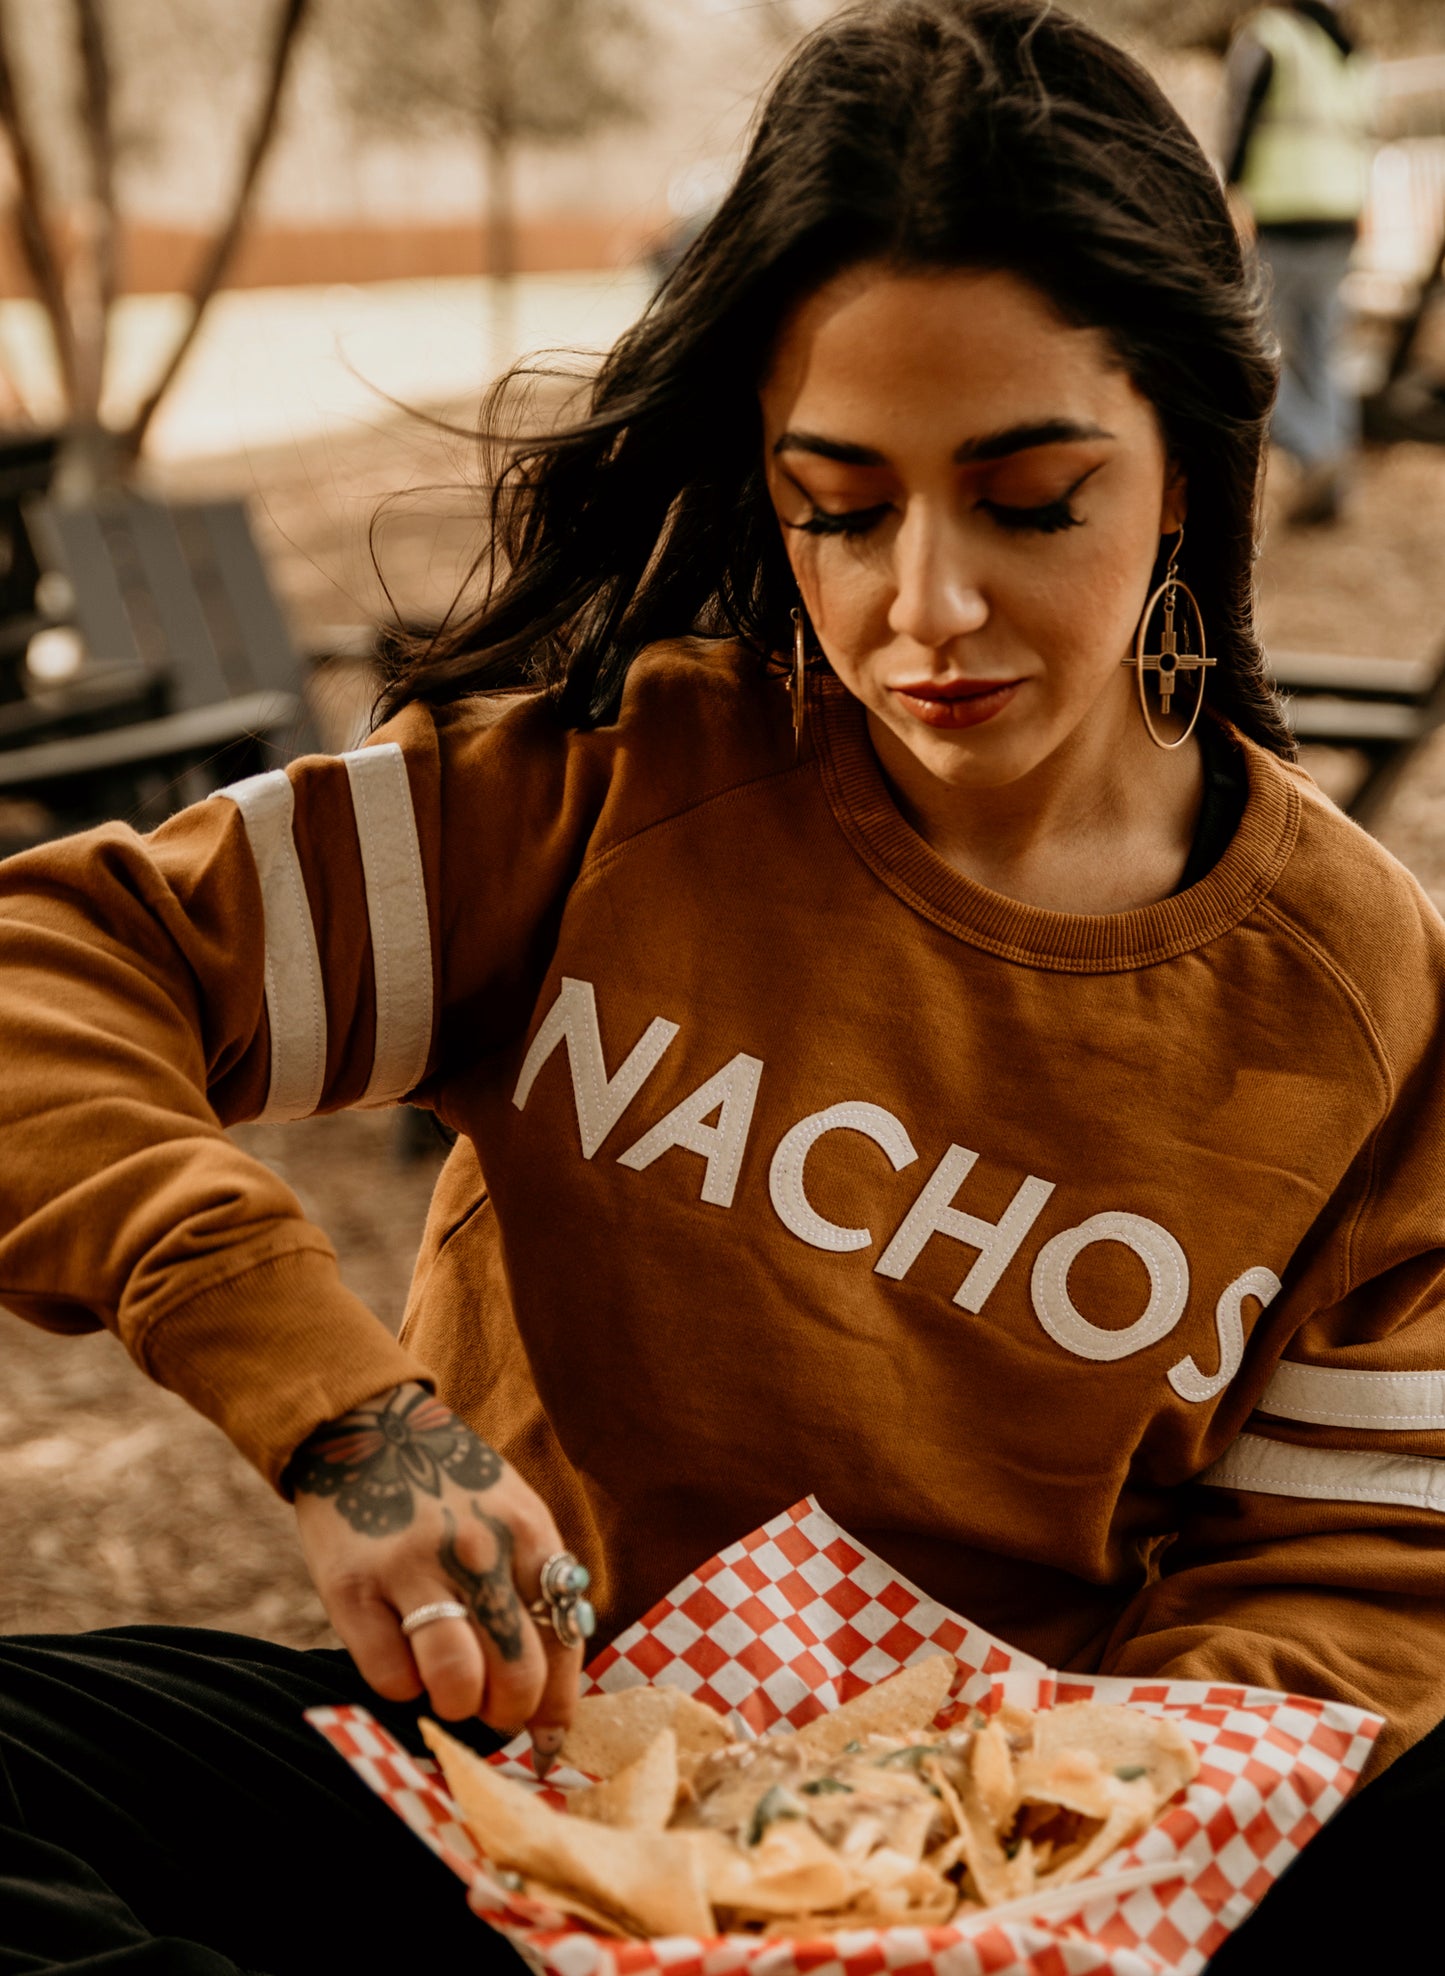 NACHOS Felt Letter Vintage Style Hemp Organic Cotton Crewneck Sweatshirt for Mexican Snack Food Lovers and Foodies